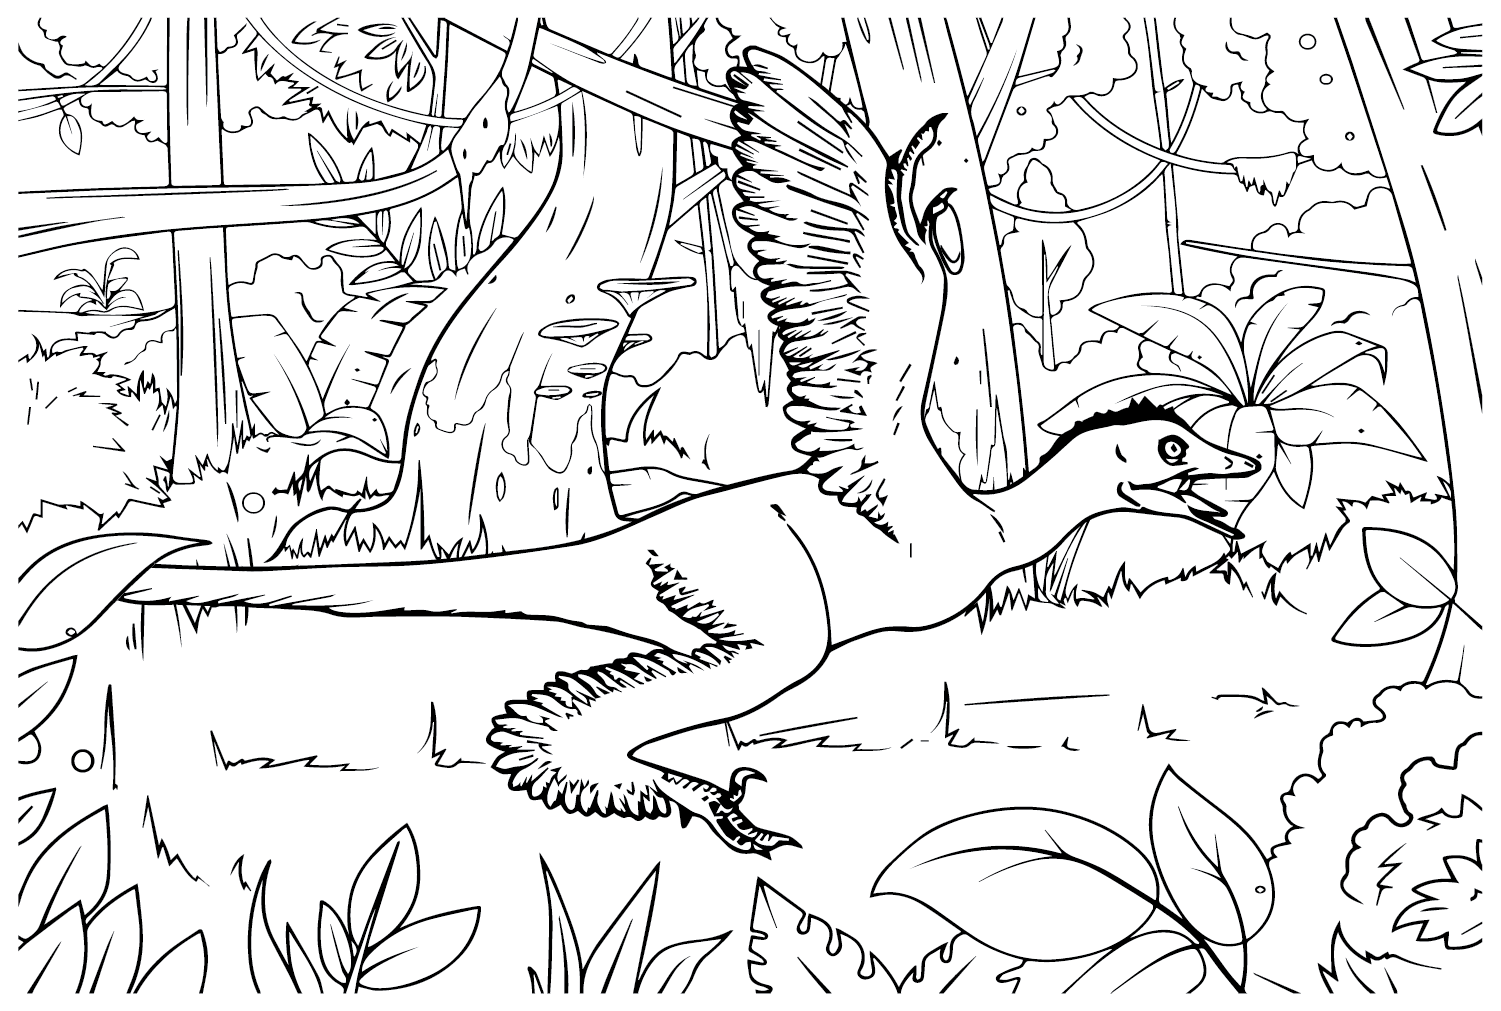 PDF da página para colorir de Utahraptor de Utahraptor